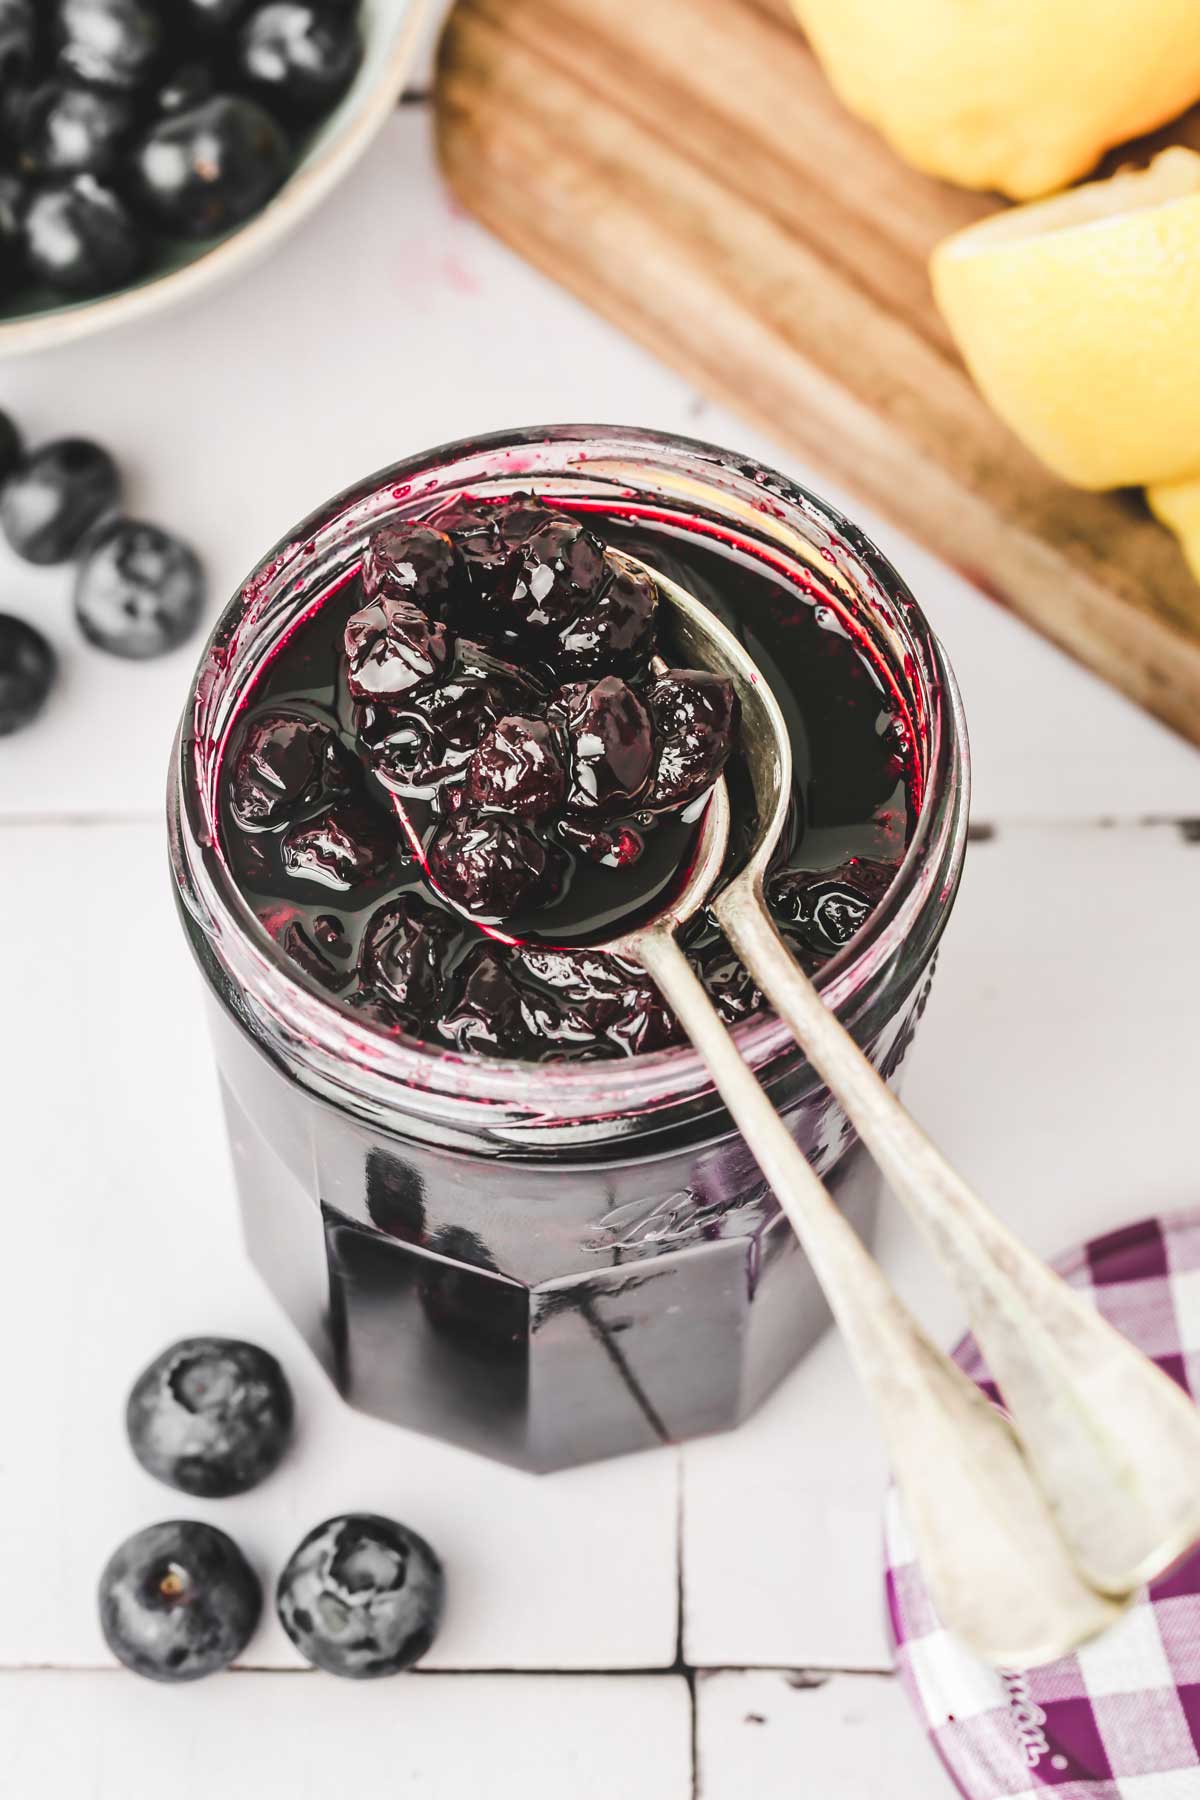 mason jar with blueberry sauce